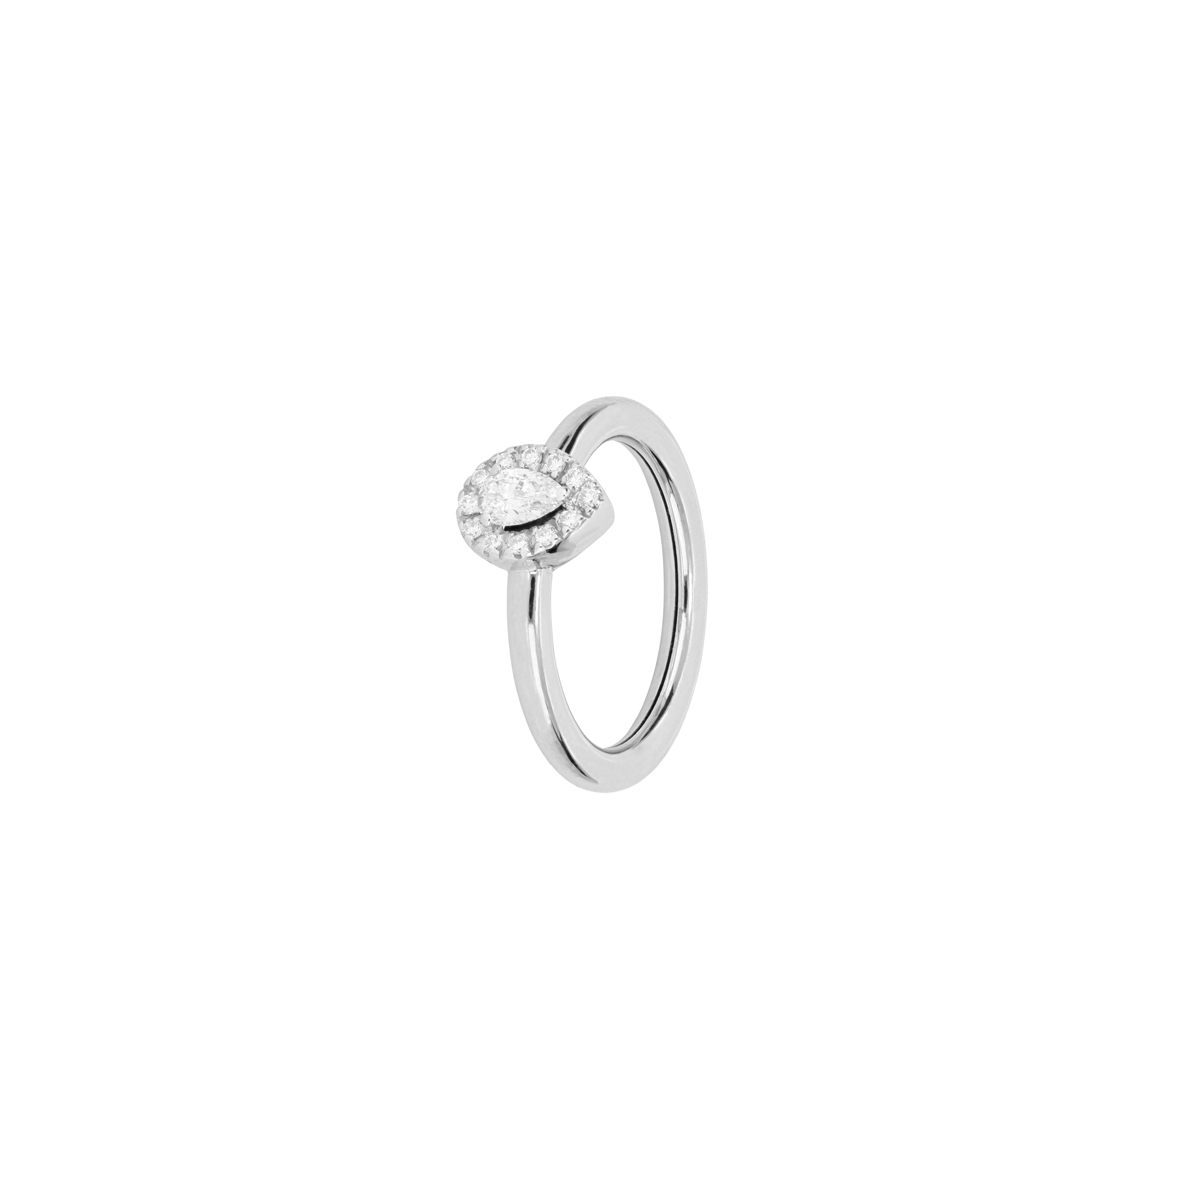 White Gold Pear-Cut Diamond Halo Ring 